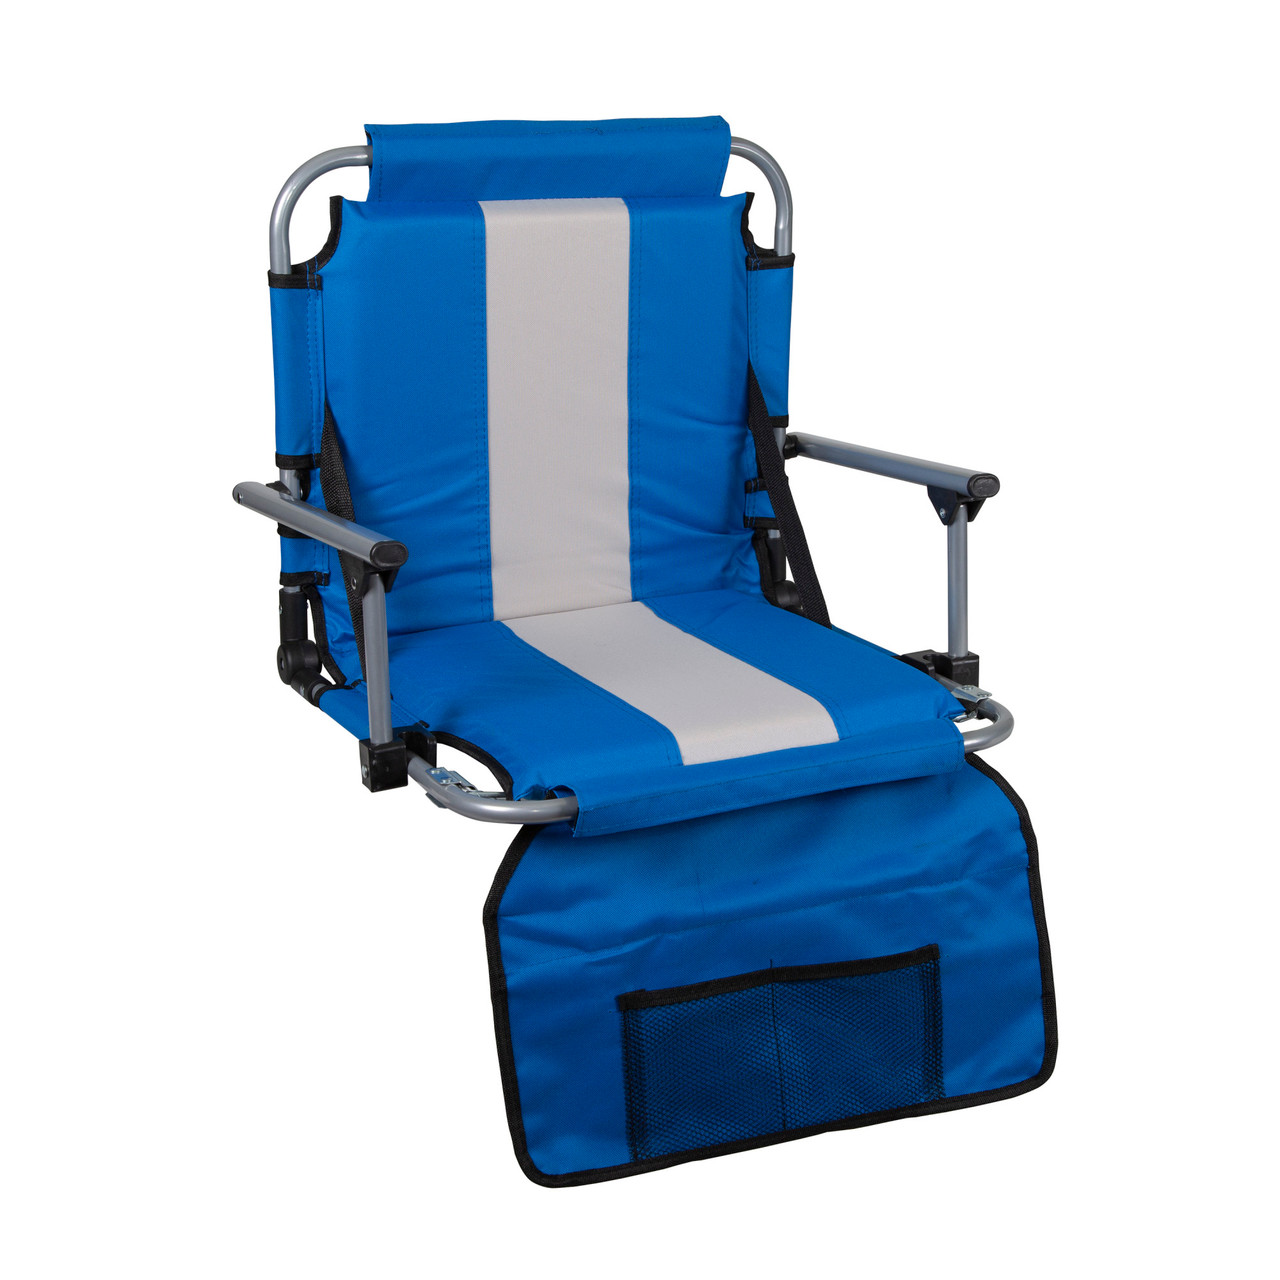 Tubular Frame Folding Stadium Seat with Arms - Blue/Tan - Stansport